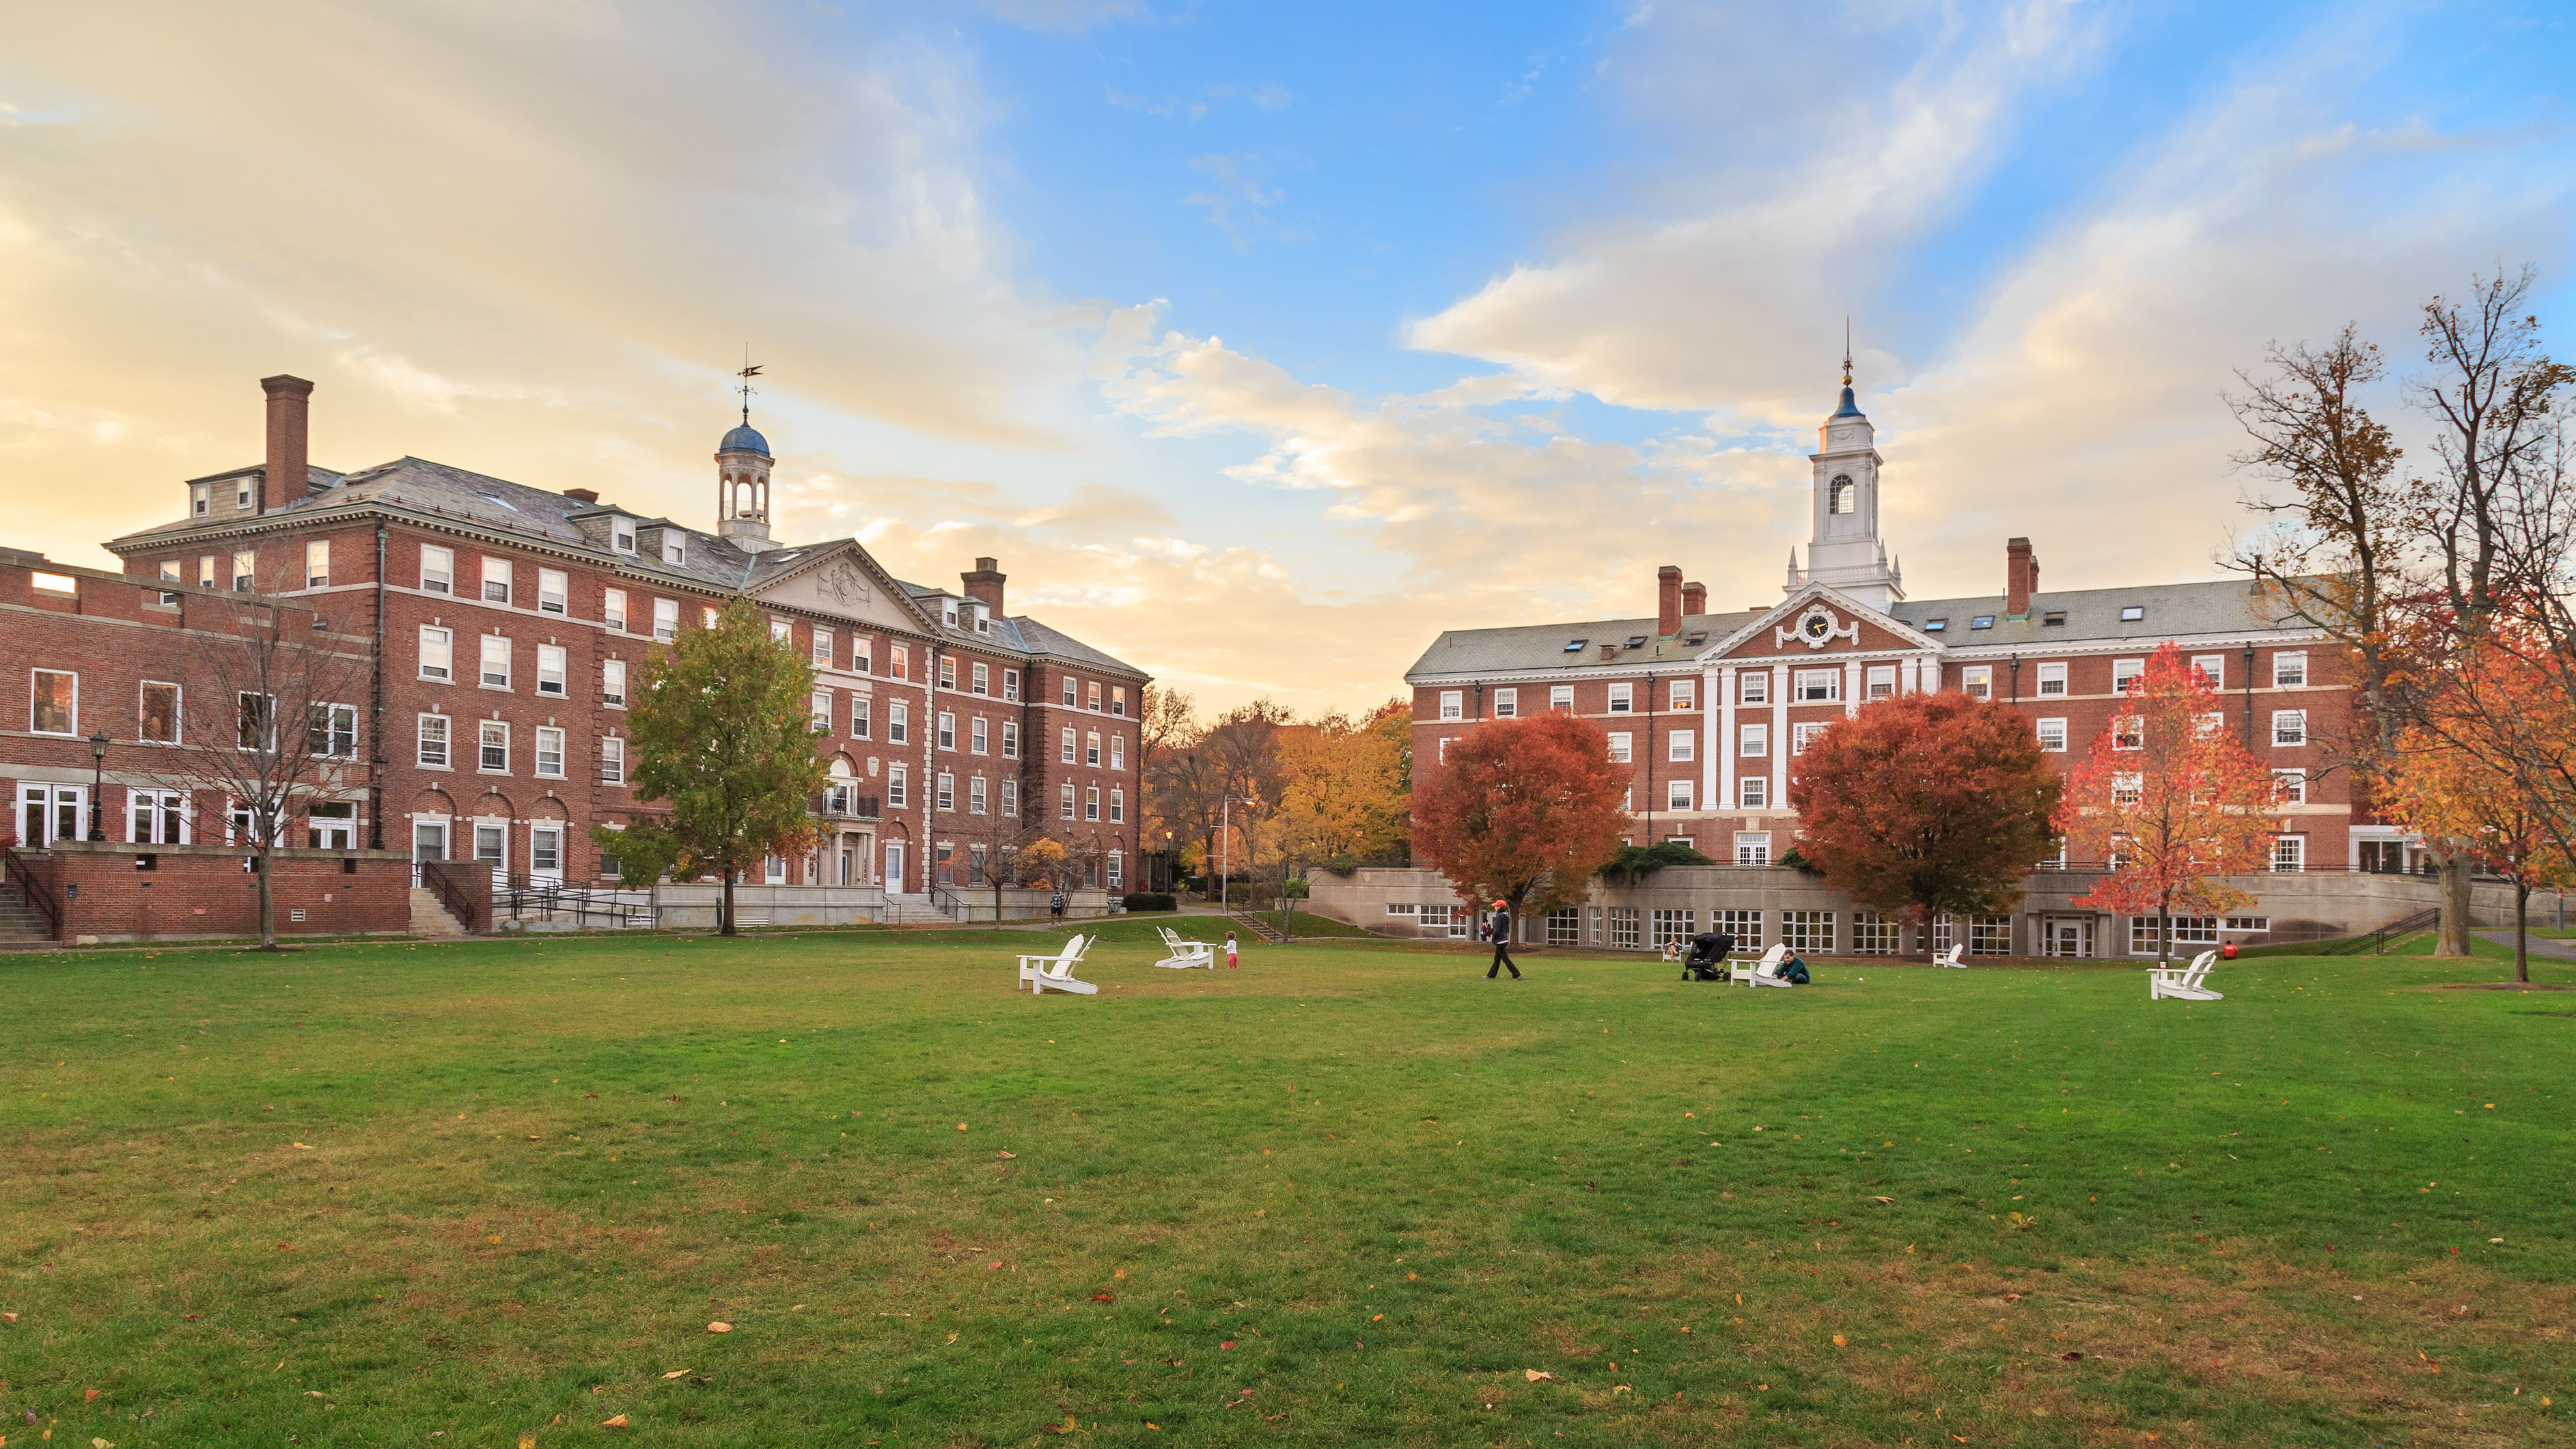 Cambridge, MA, USA - November 2, 2013: Radcliffe Quad undergrad housing at Harvard University in Fall in Cambridge, MA, USA on November 2, 2013.
test